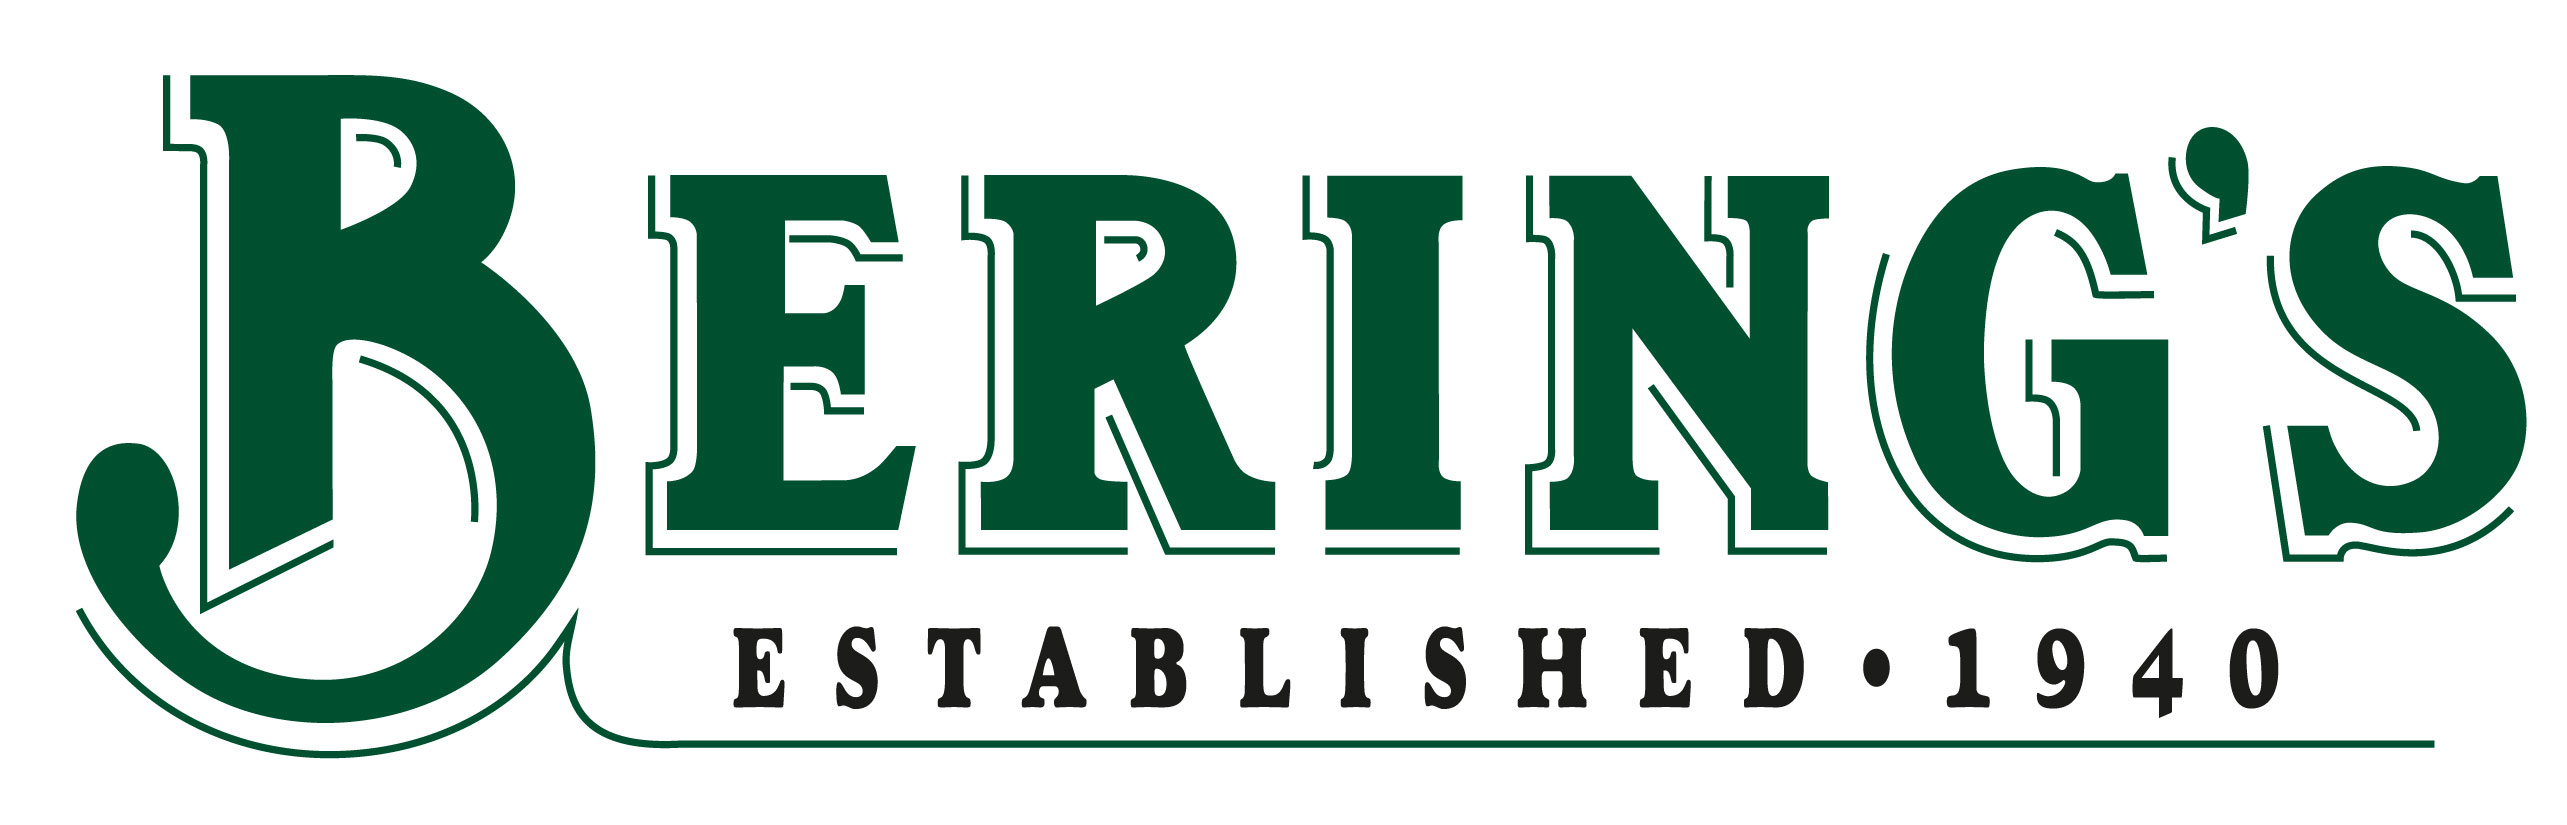 Berings logo New Traditional